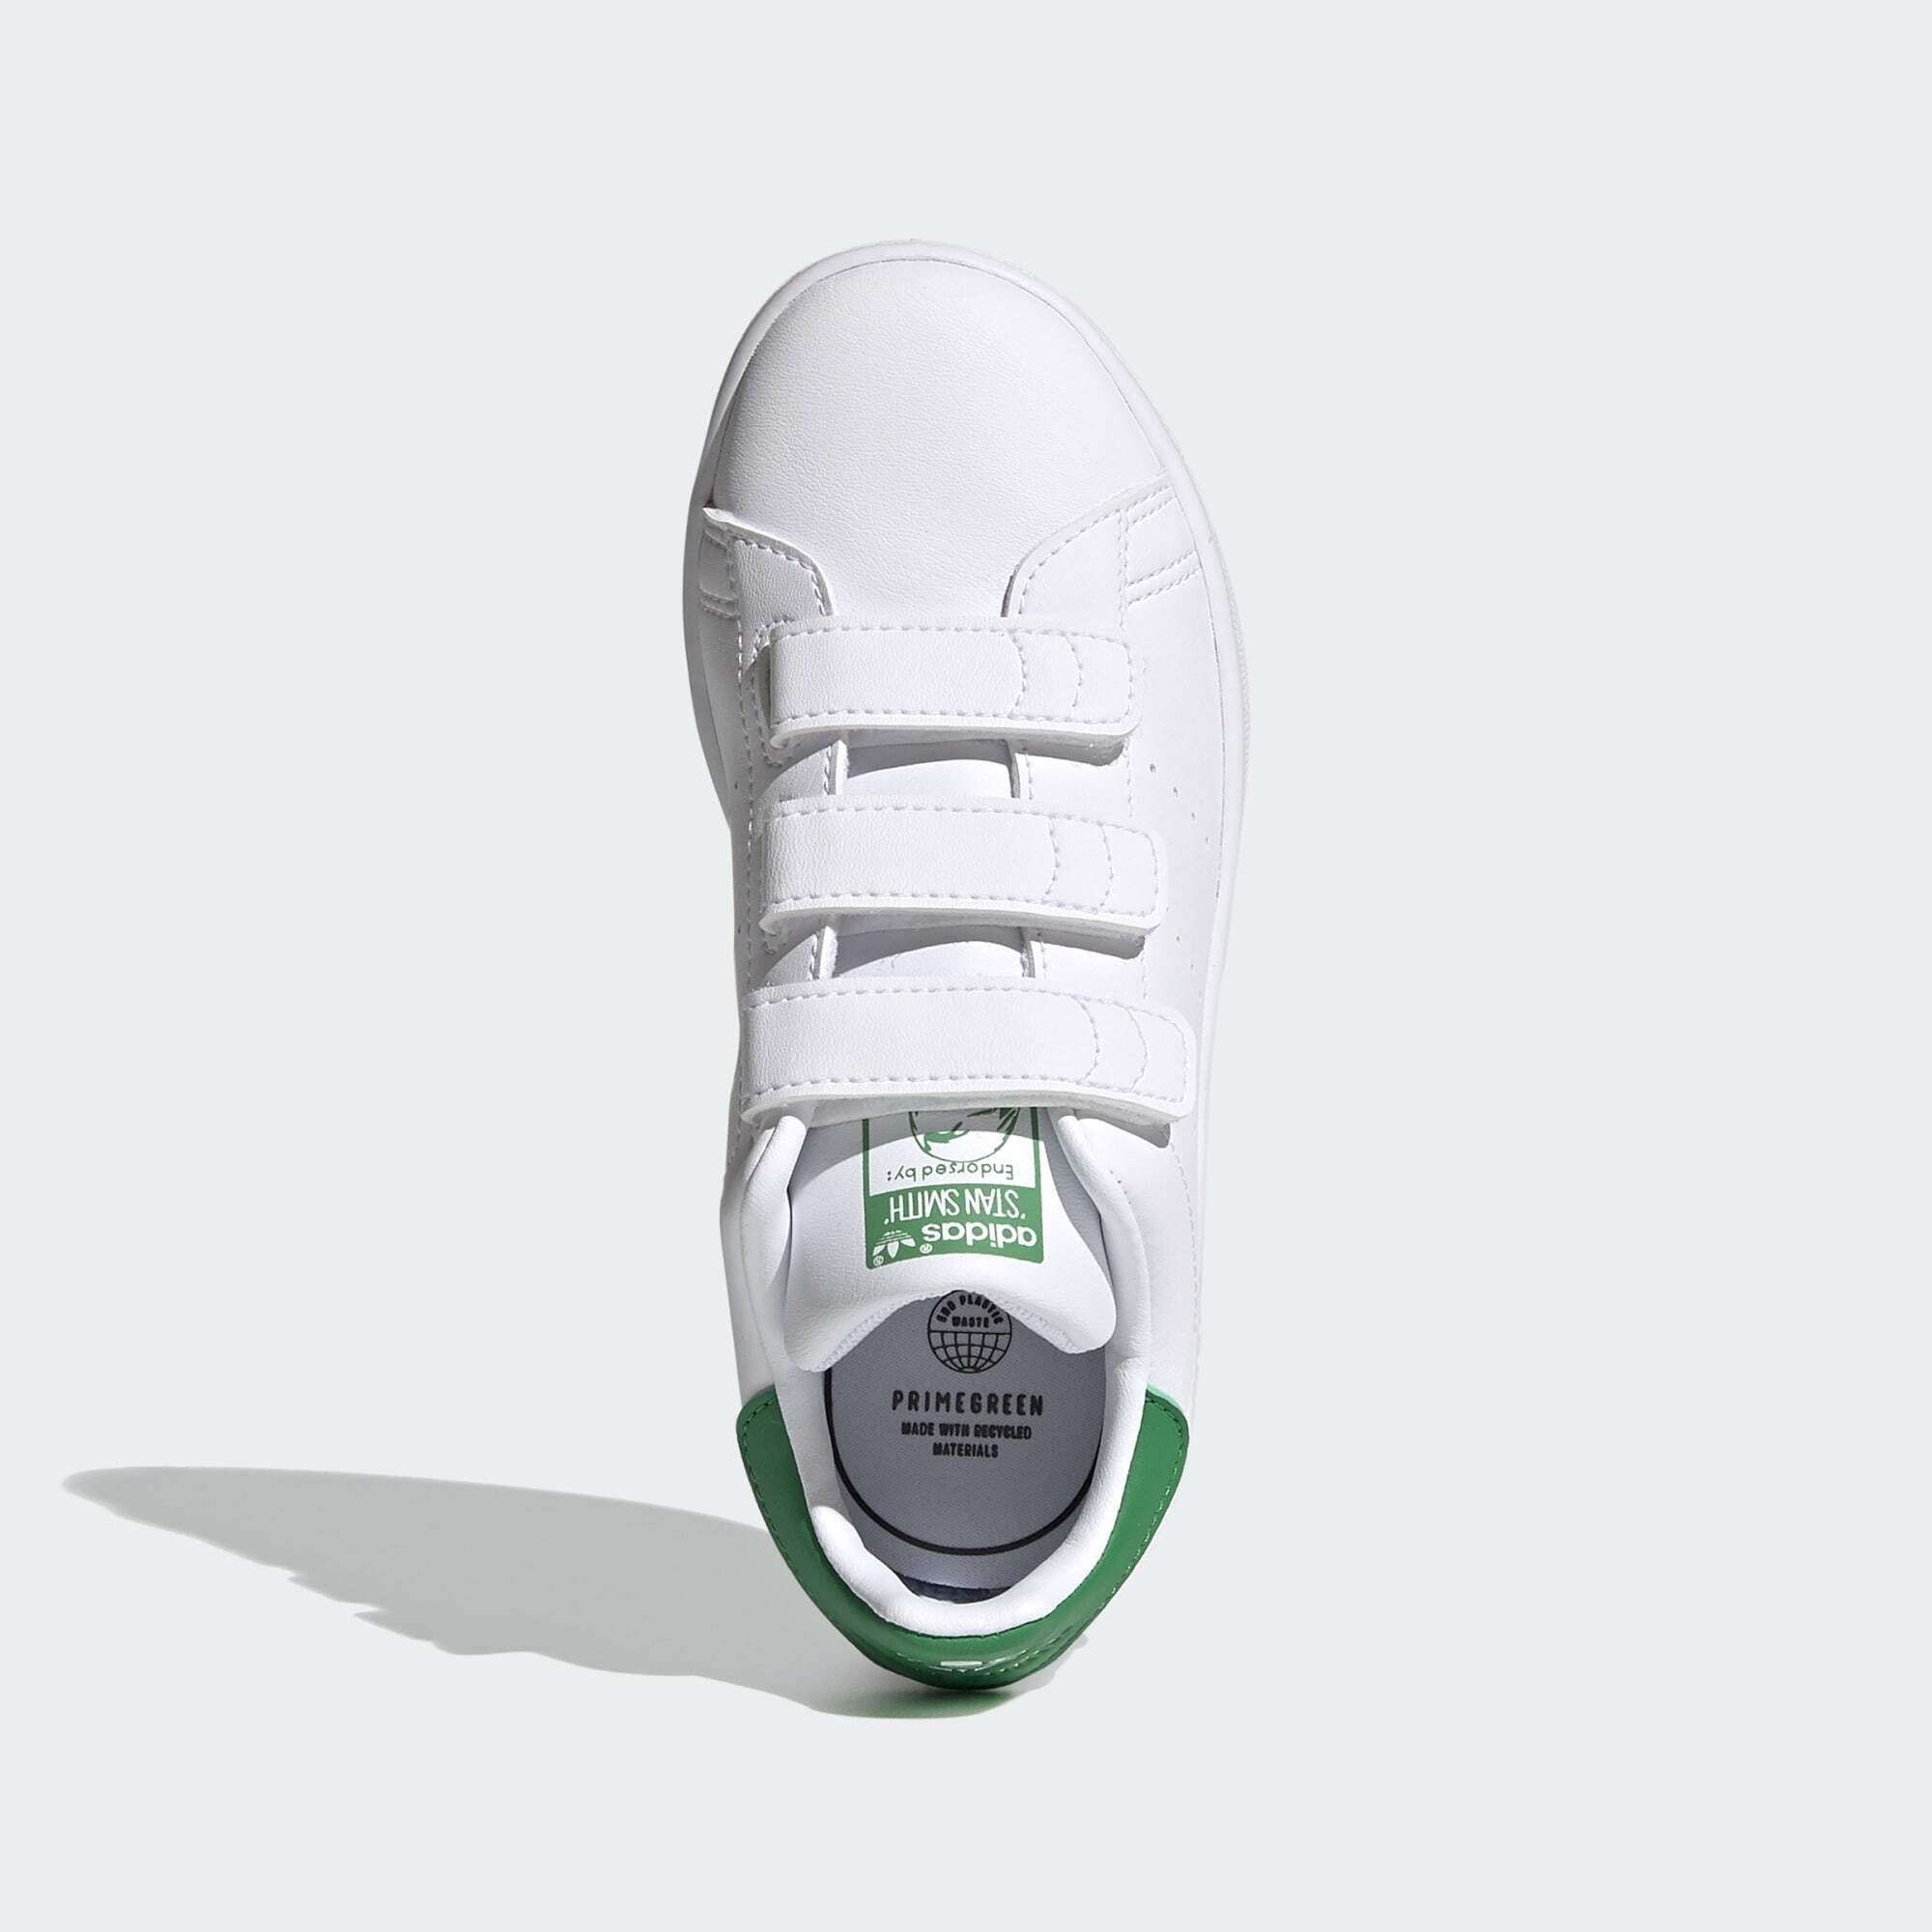 Sneaker Originals White Cloud Green SCHUH / White / Cloud adidas STAN SMITH